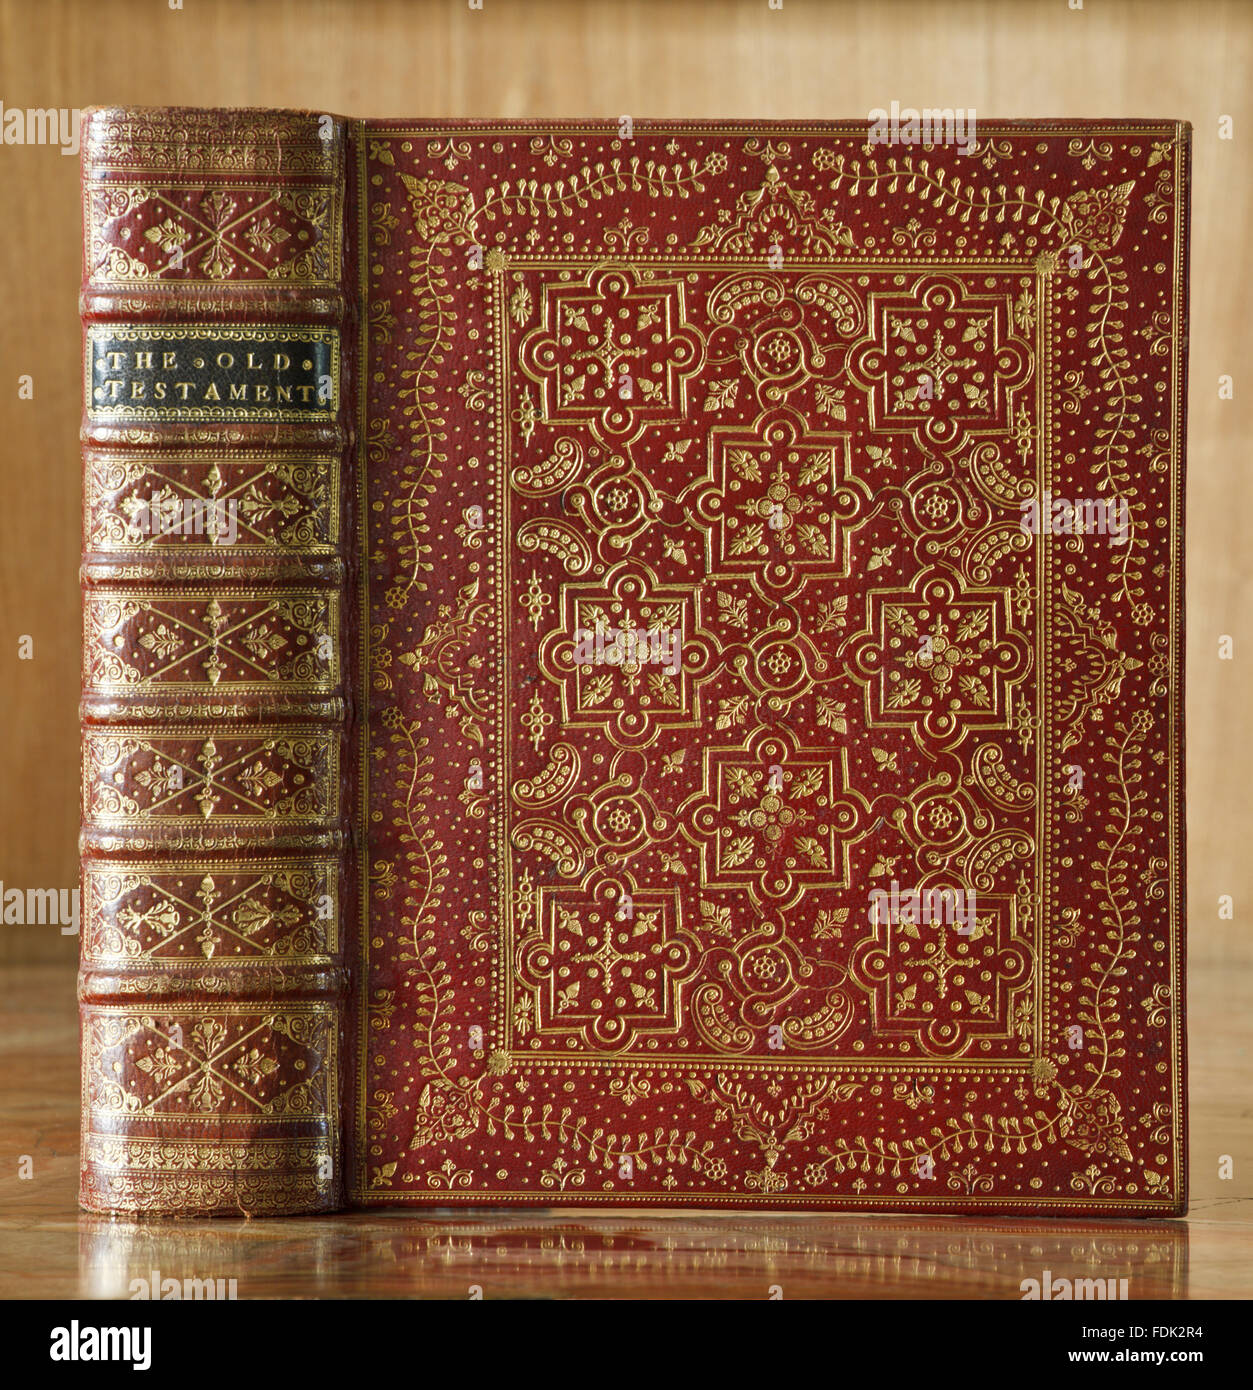 1712-13 biblia roja estampada con Marruecos vinculantes, en Anglesey Abbey, Cambridgeshire. 17.I.16 Foto de stock